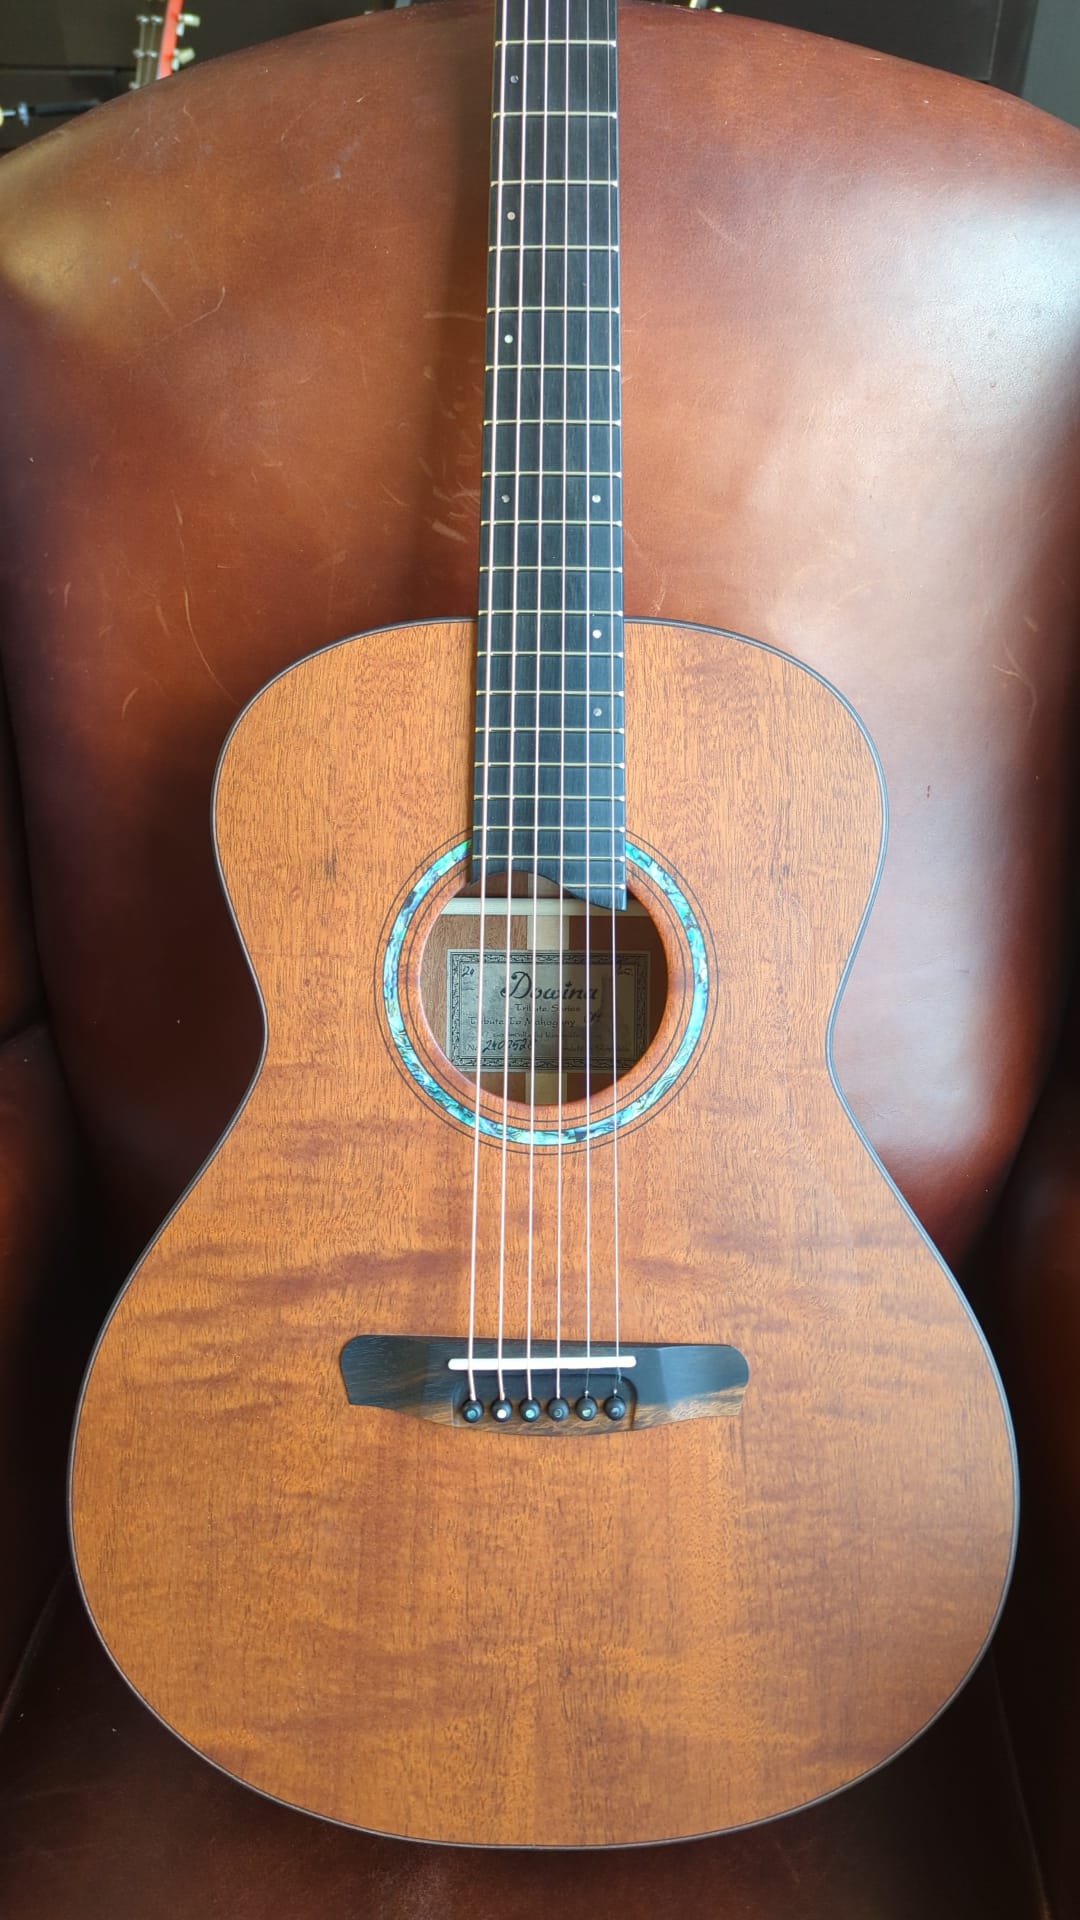 Dowina Tribute To Honduran Mahogany OMG (15+ years old), Acoustic Guitar for sale at Richards Guitars.